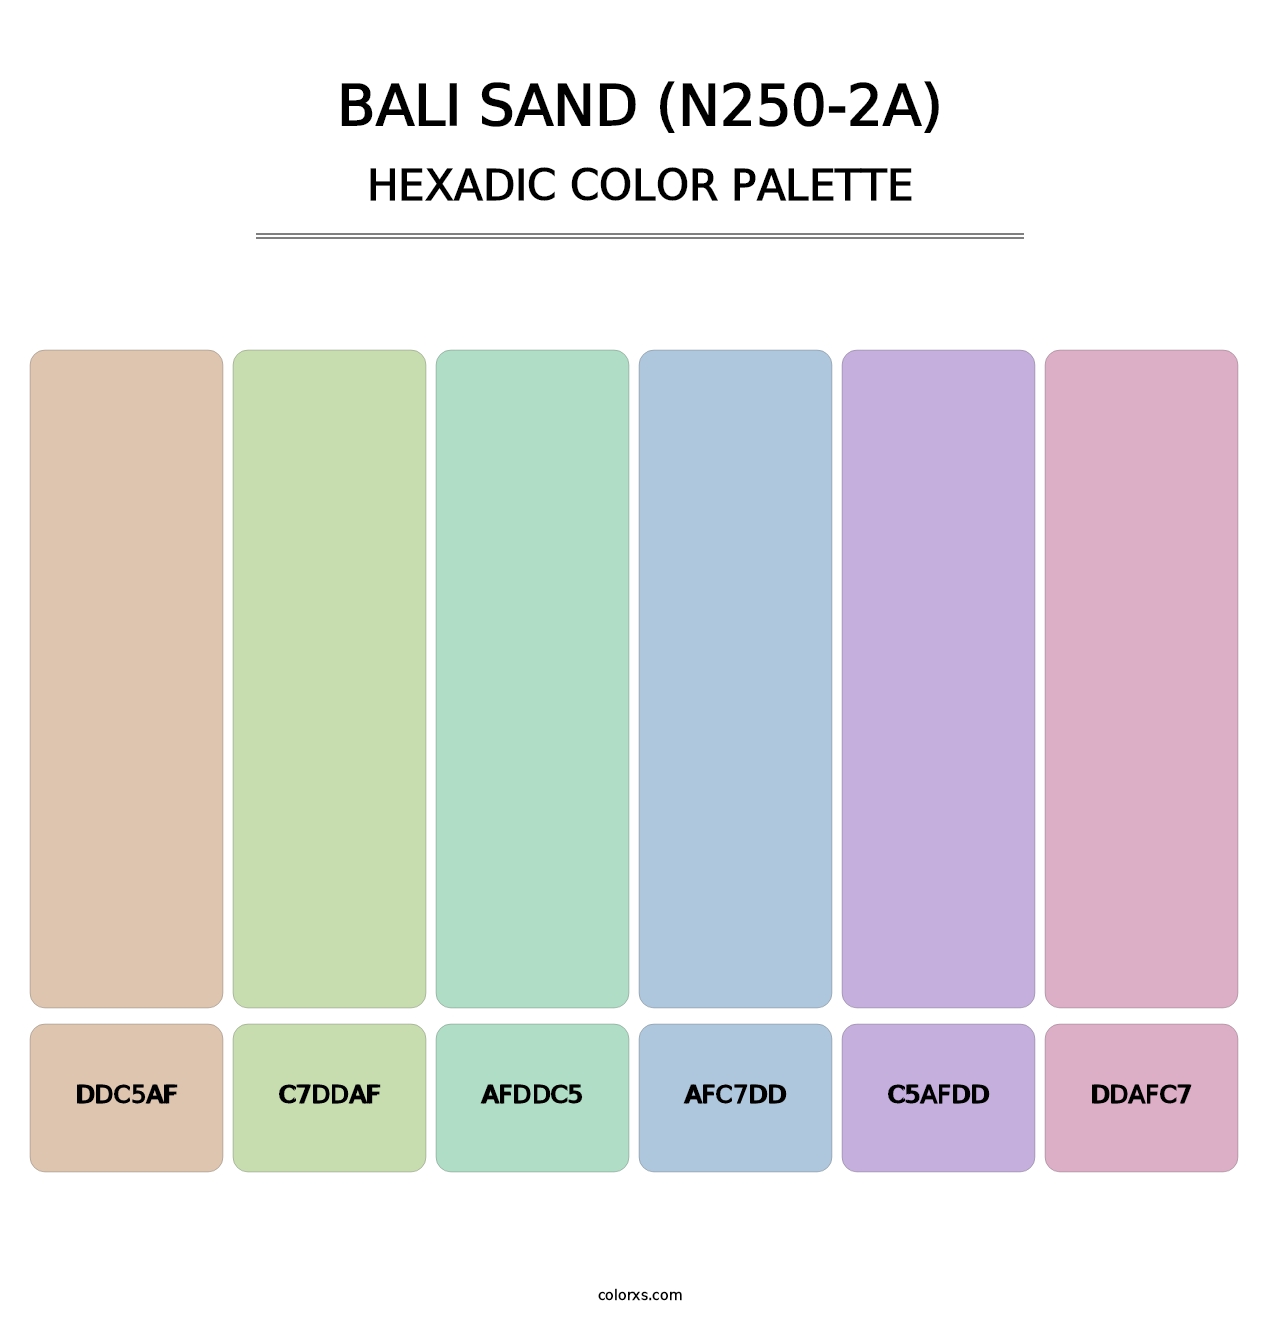 Bali Sand (N250-2A) - Hexadic Color Palette